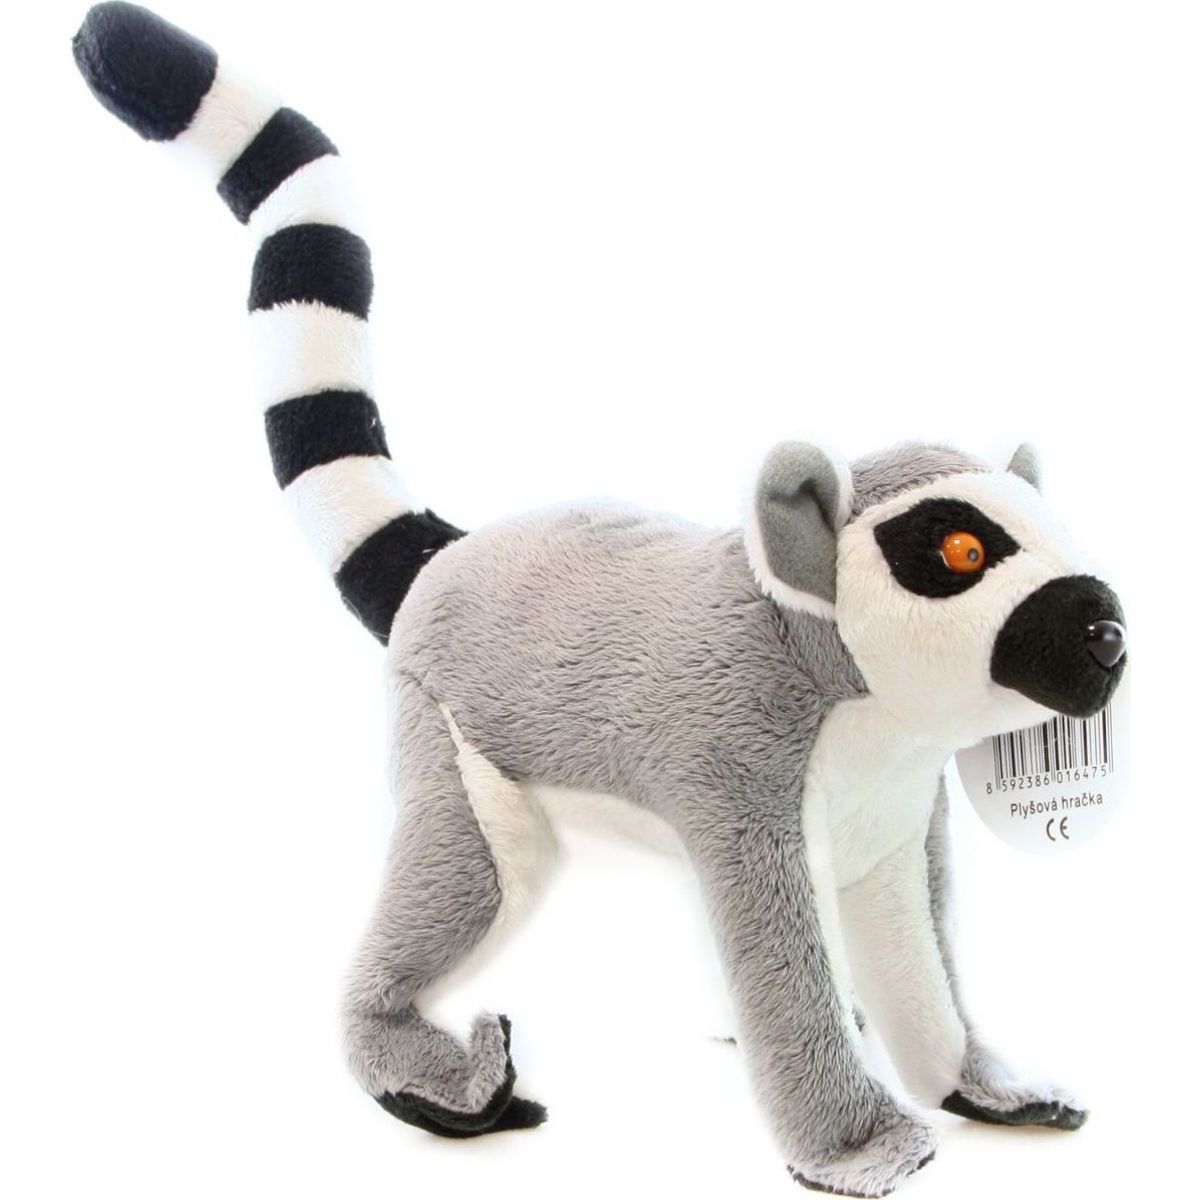 Plyšový lemur 18 cm